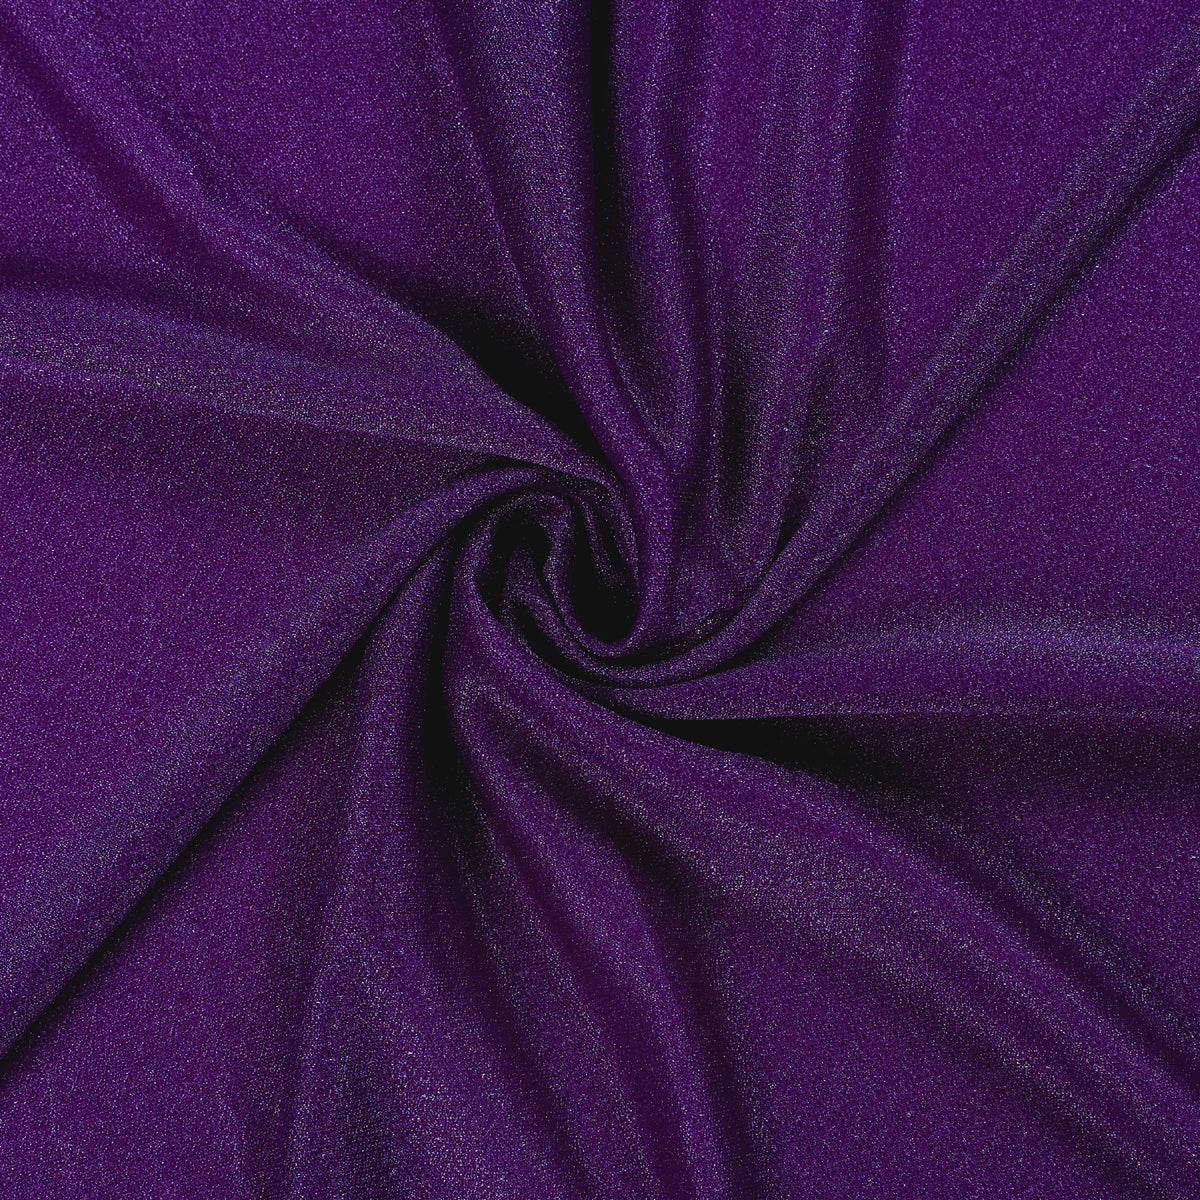 Purple,f6d02028-1787-4d97-ac99-e38edf01cc05